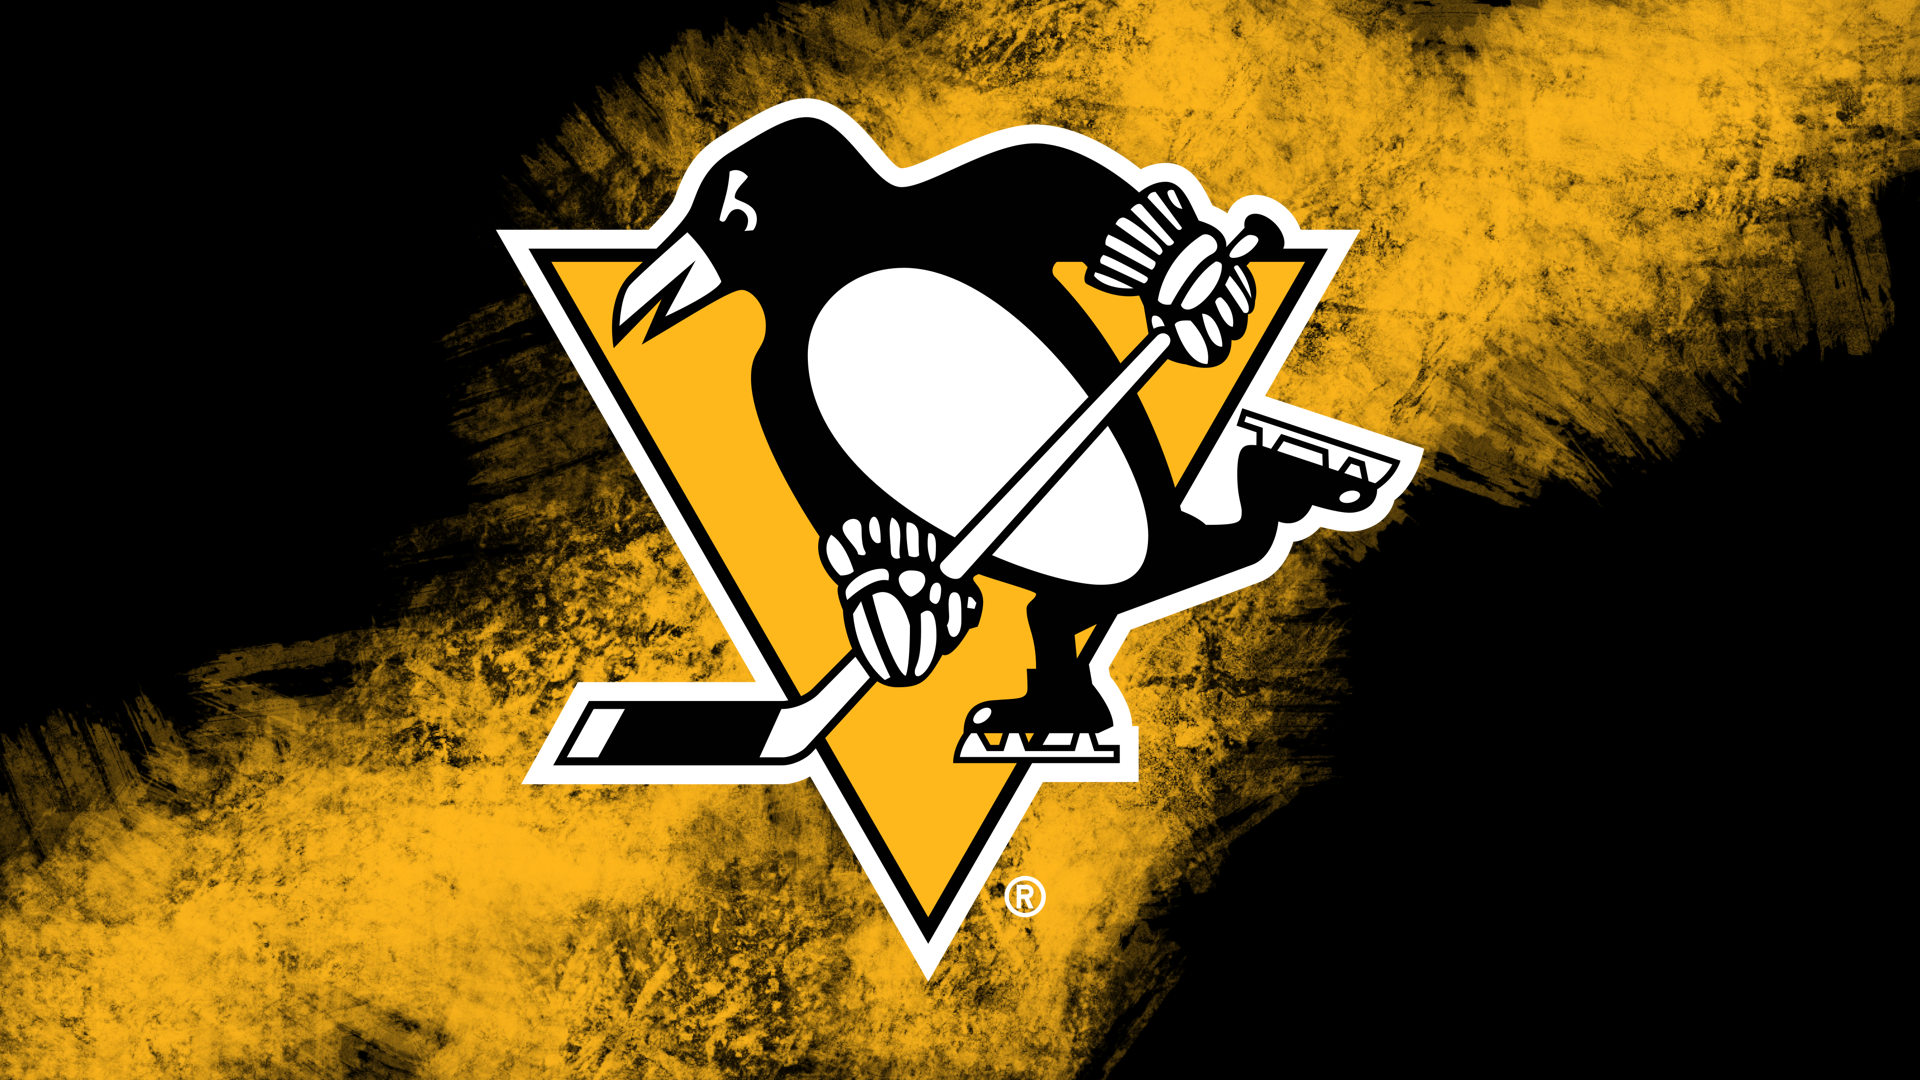 Penguins-NHL DeviantArt Gallery